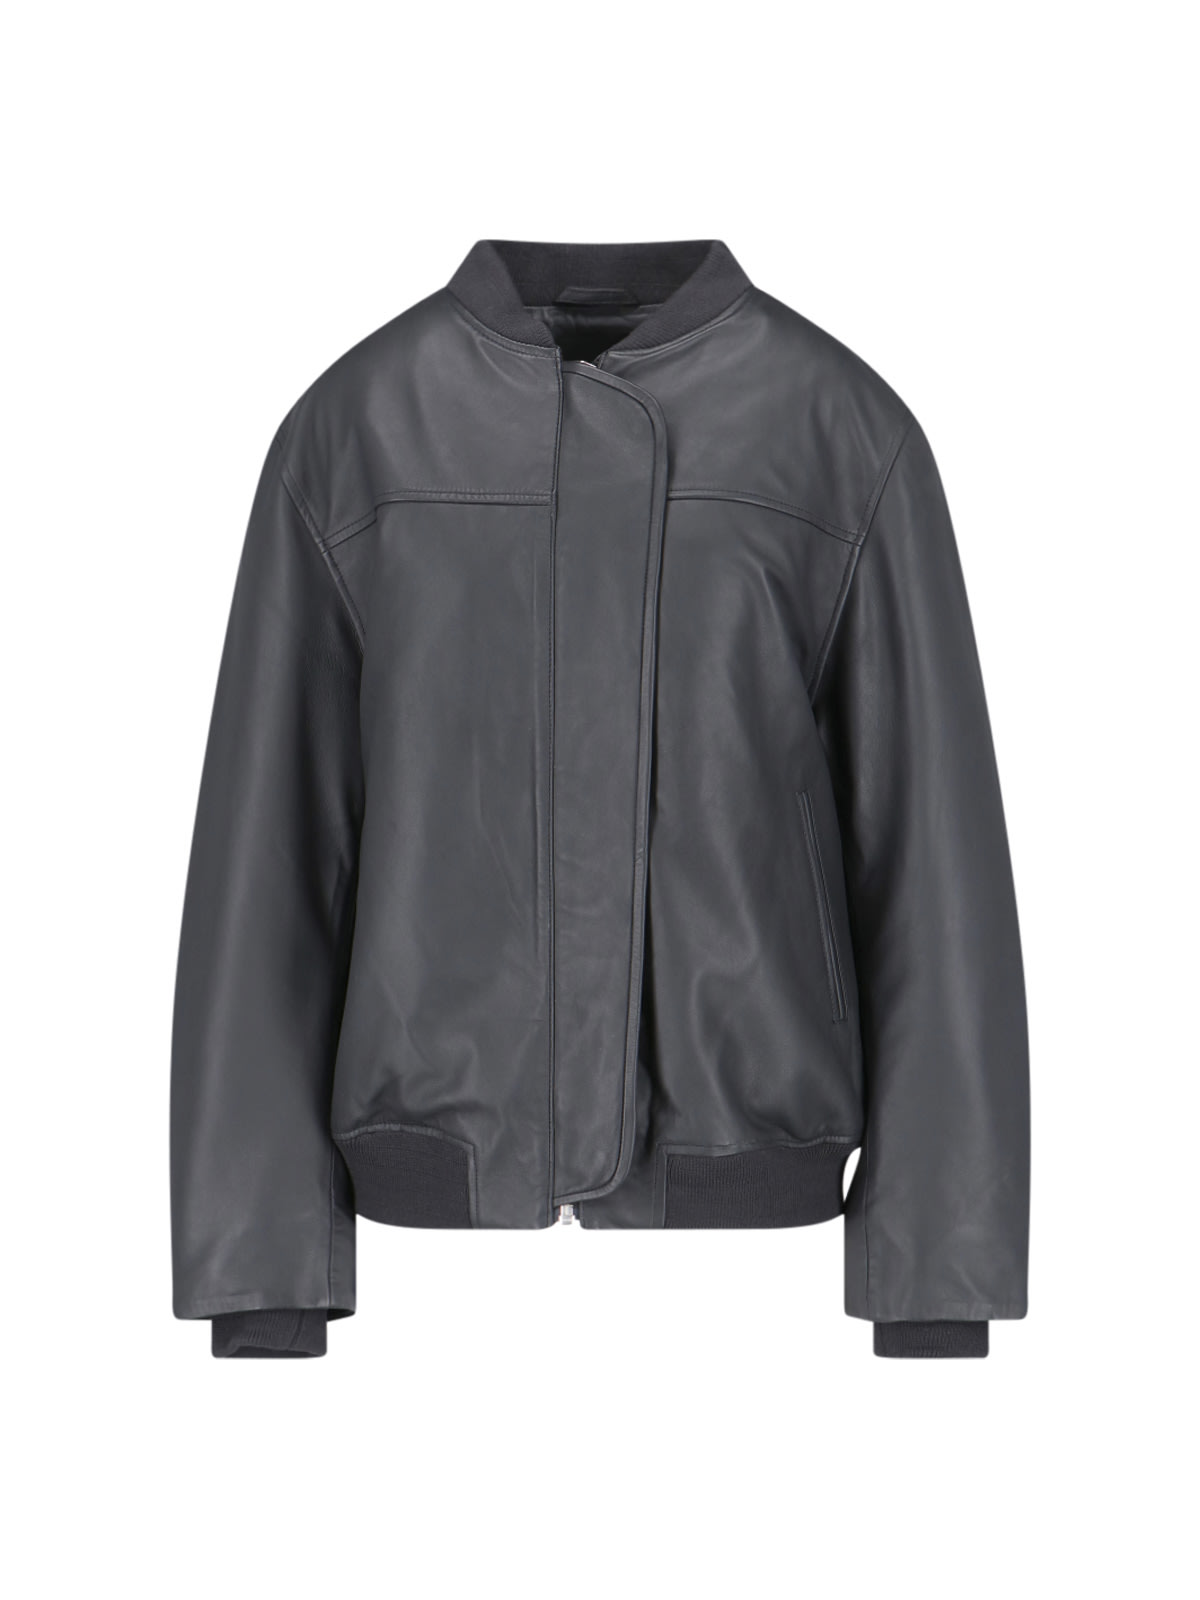 Remain Birger Christensen Leather Bomber Jacket In Black